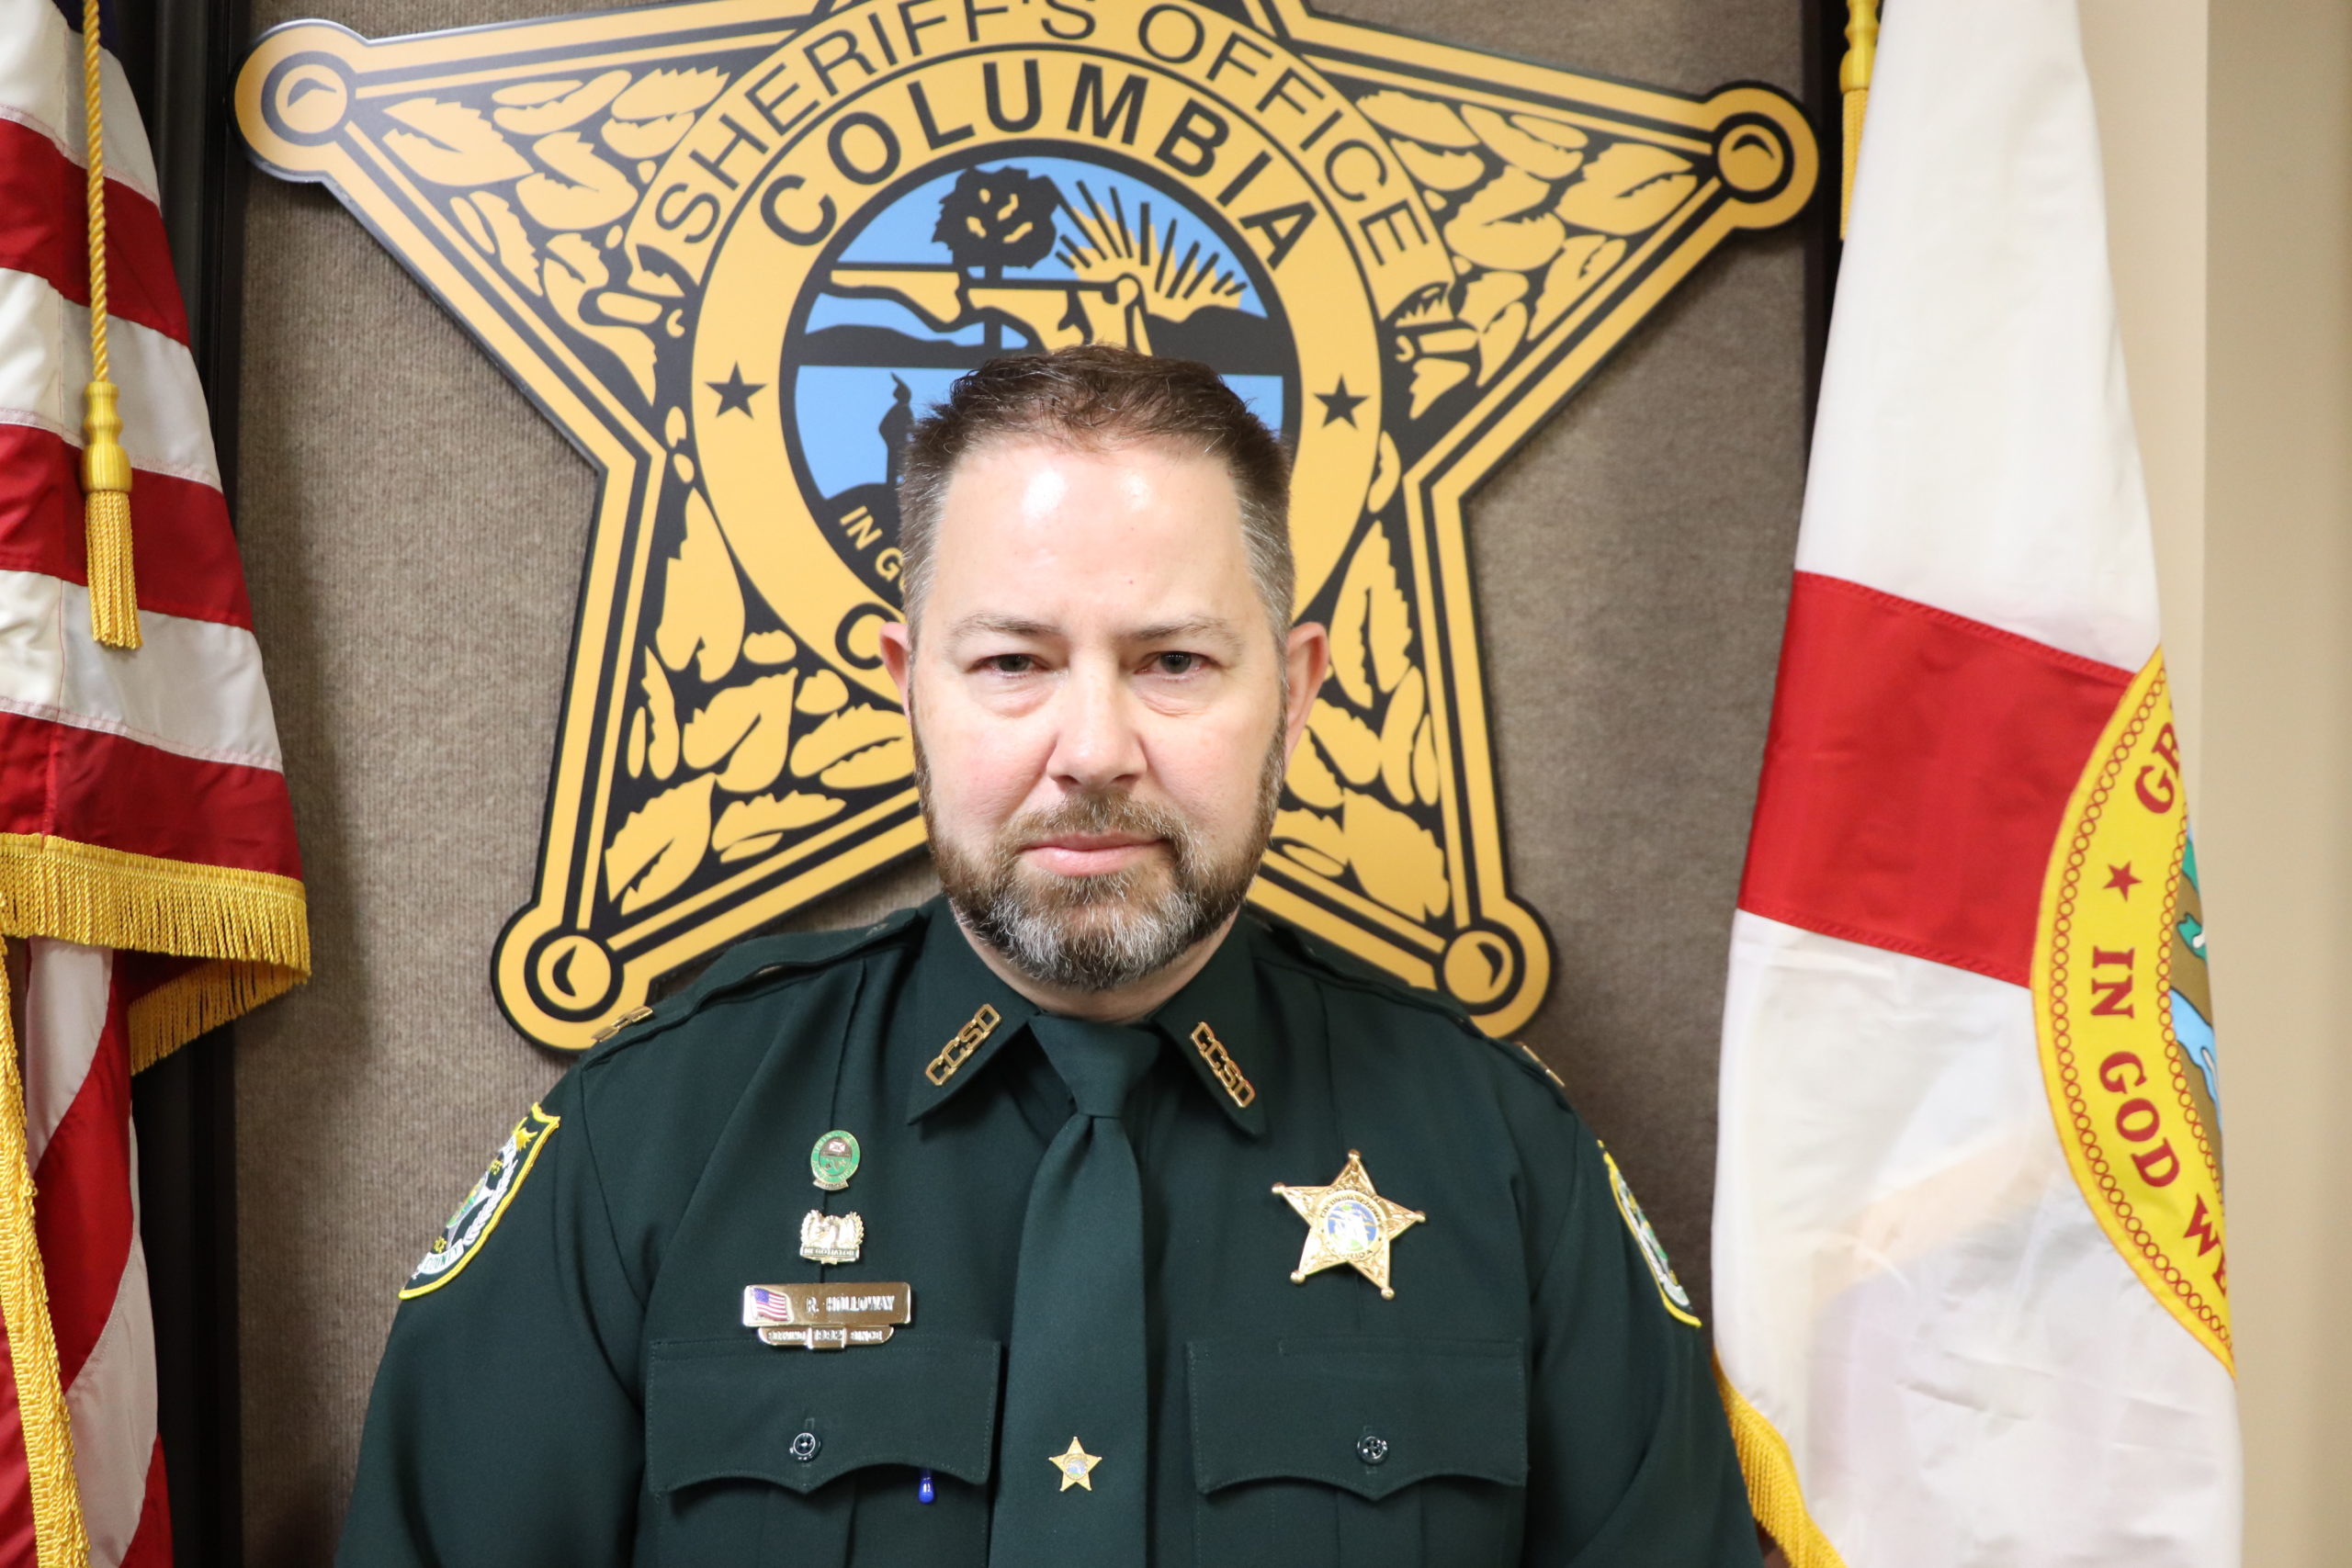 U.S. State of Florida CITROS COUNTY FLORIDA Deputy SHERIFF バッジ